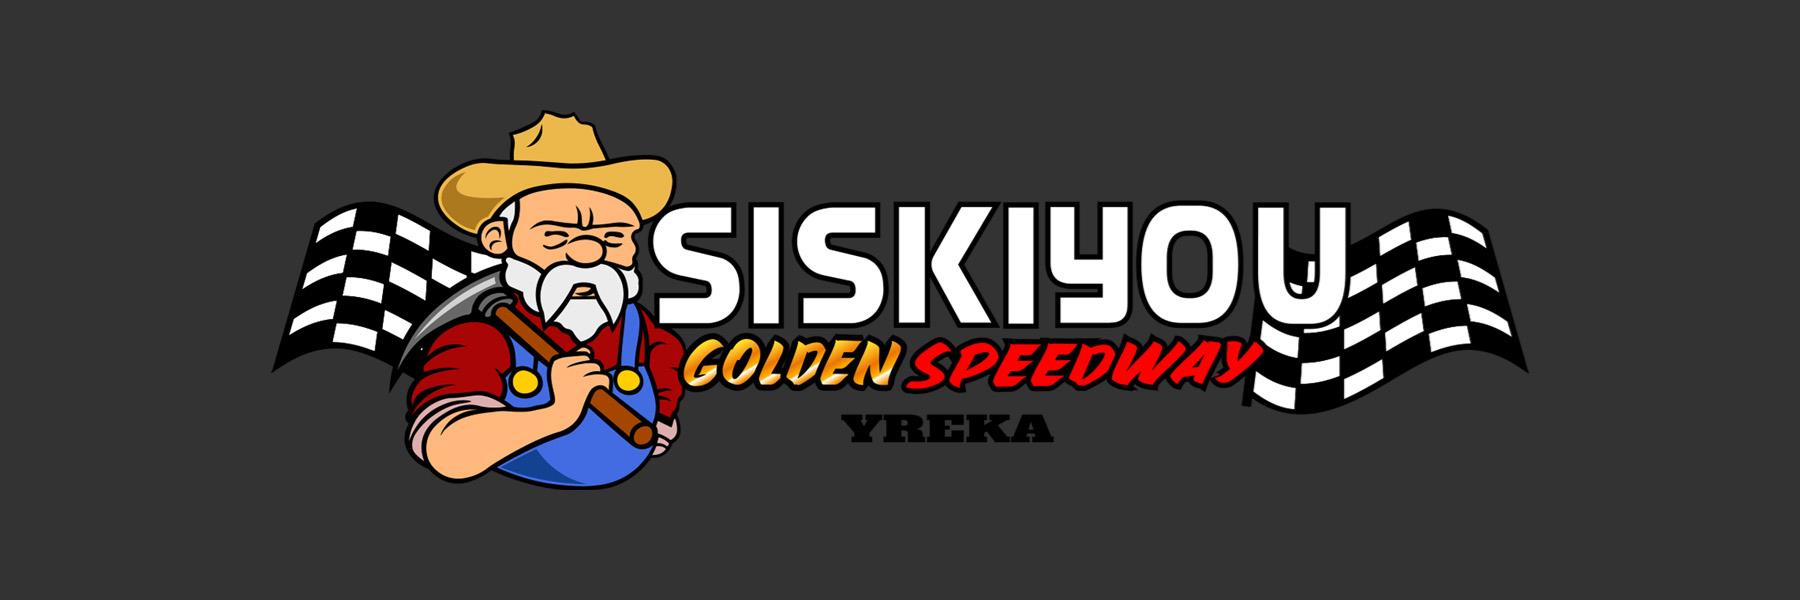 9/4/2021 - Siskiyou Golden Speedway